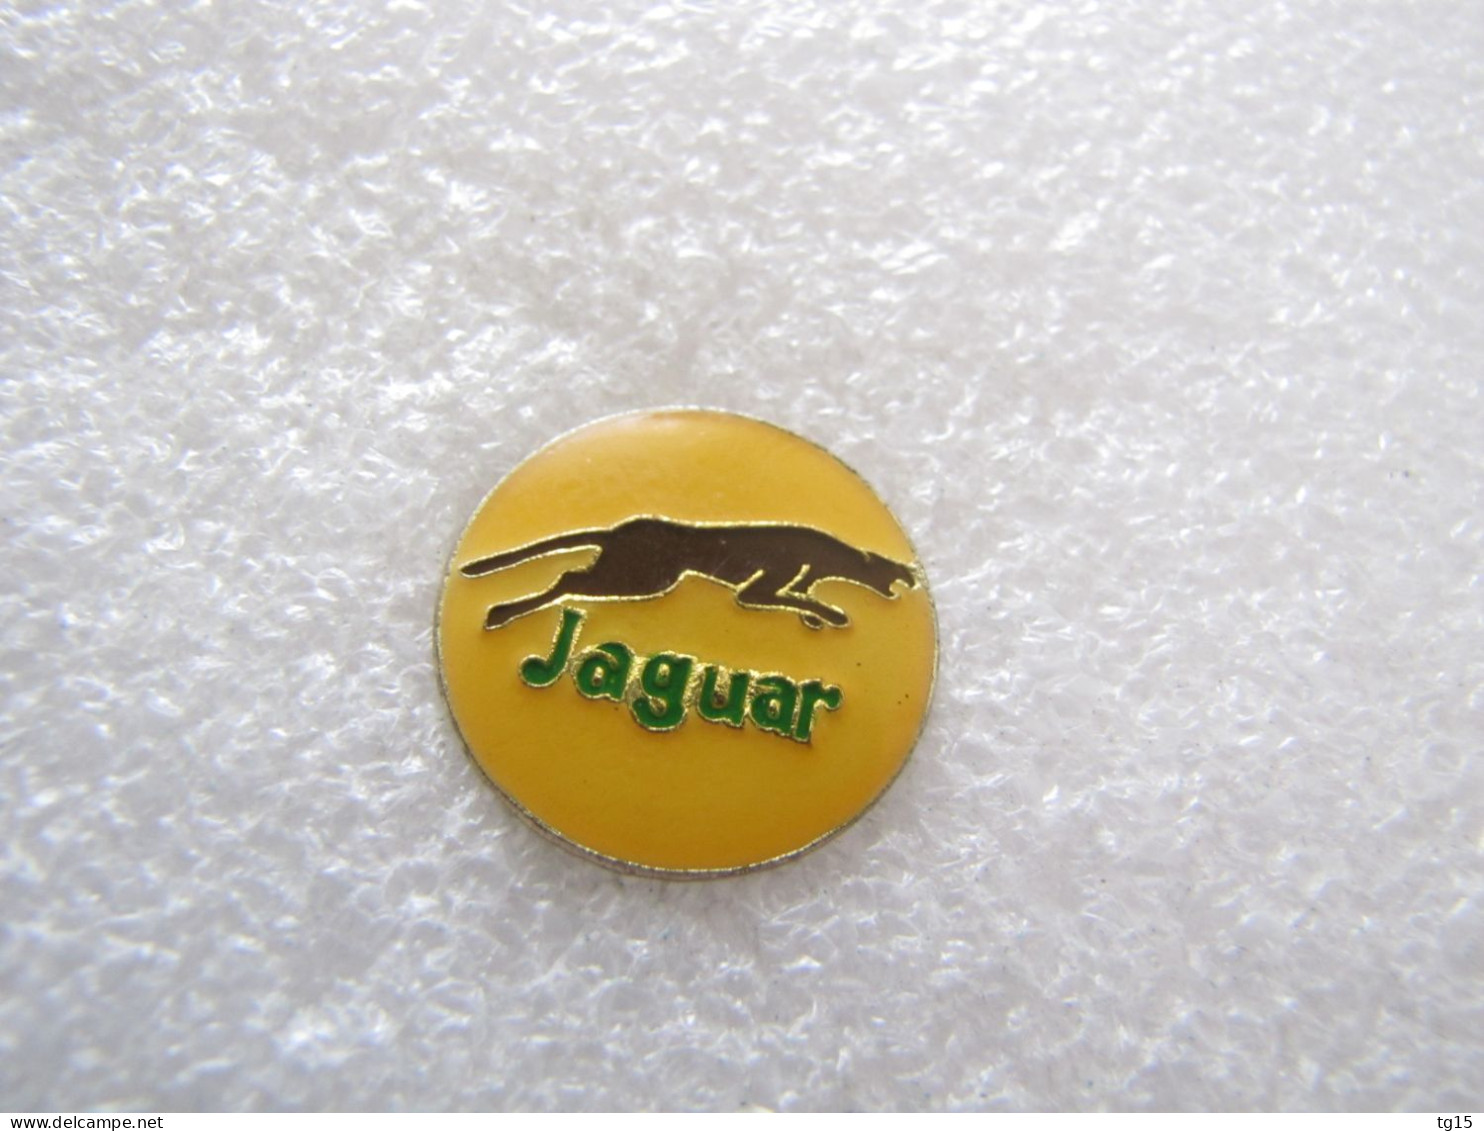 PIN'S    LOGO  JAGUAR  Ø 20 Mm - Jaguar